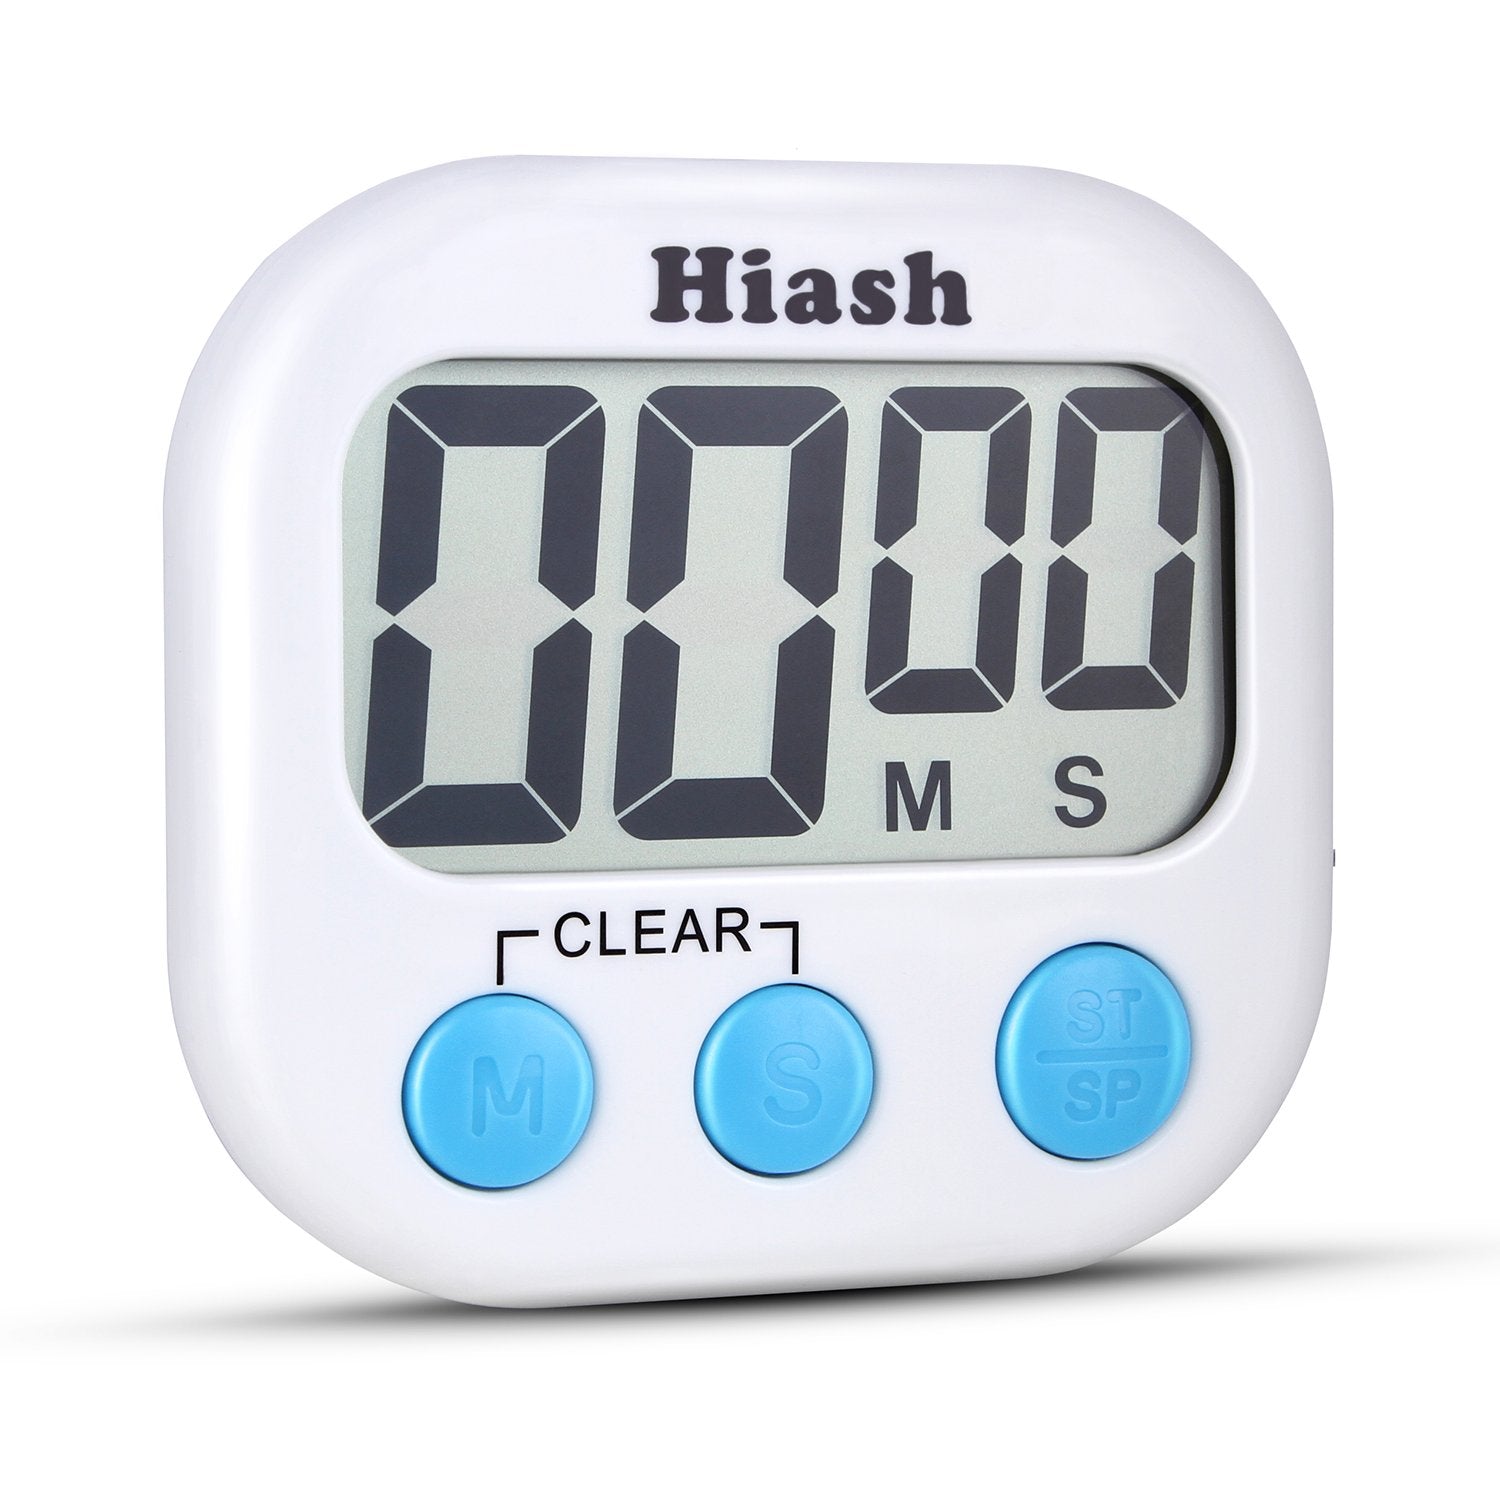 Hiash Digital Kitchen Timer Big Digital LED Display Volume Adjustable Back Strong Magnetic Automatic Shutdown, White